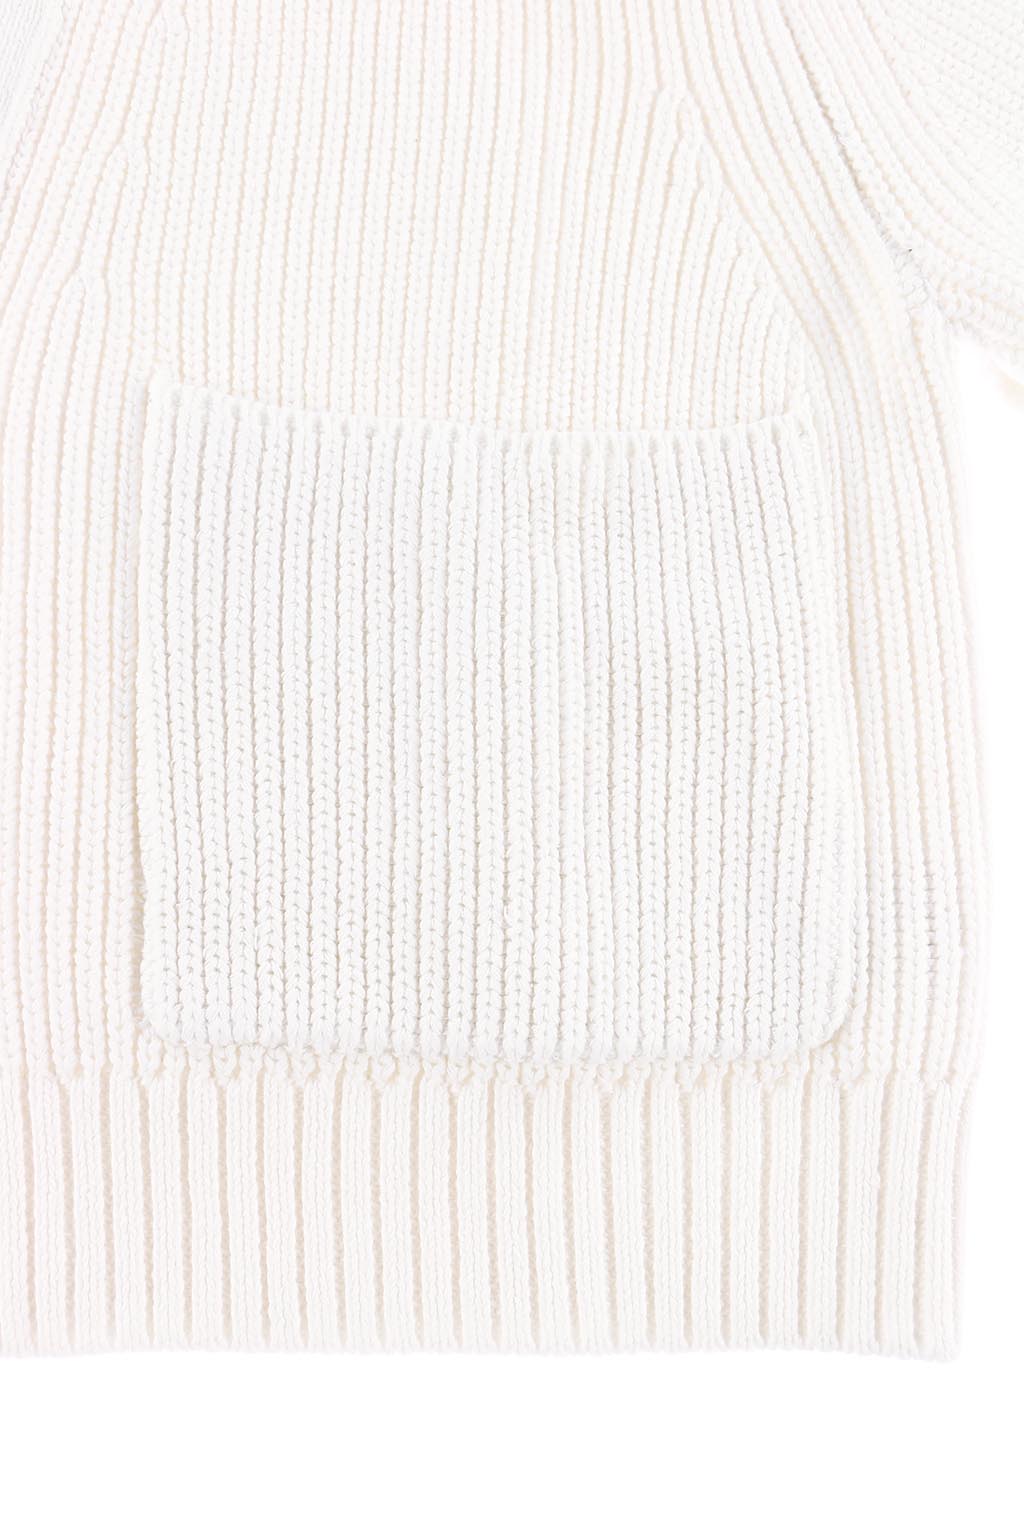 concho-button-knit-cardgan-white-10